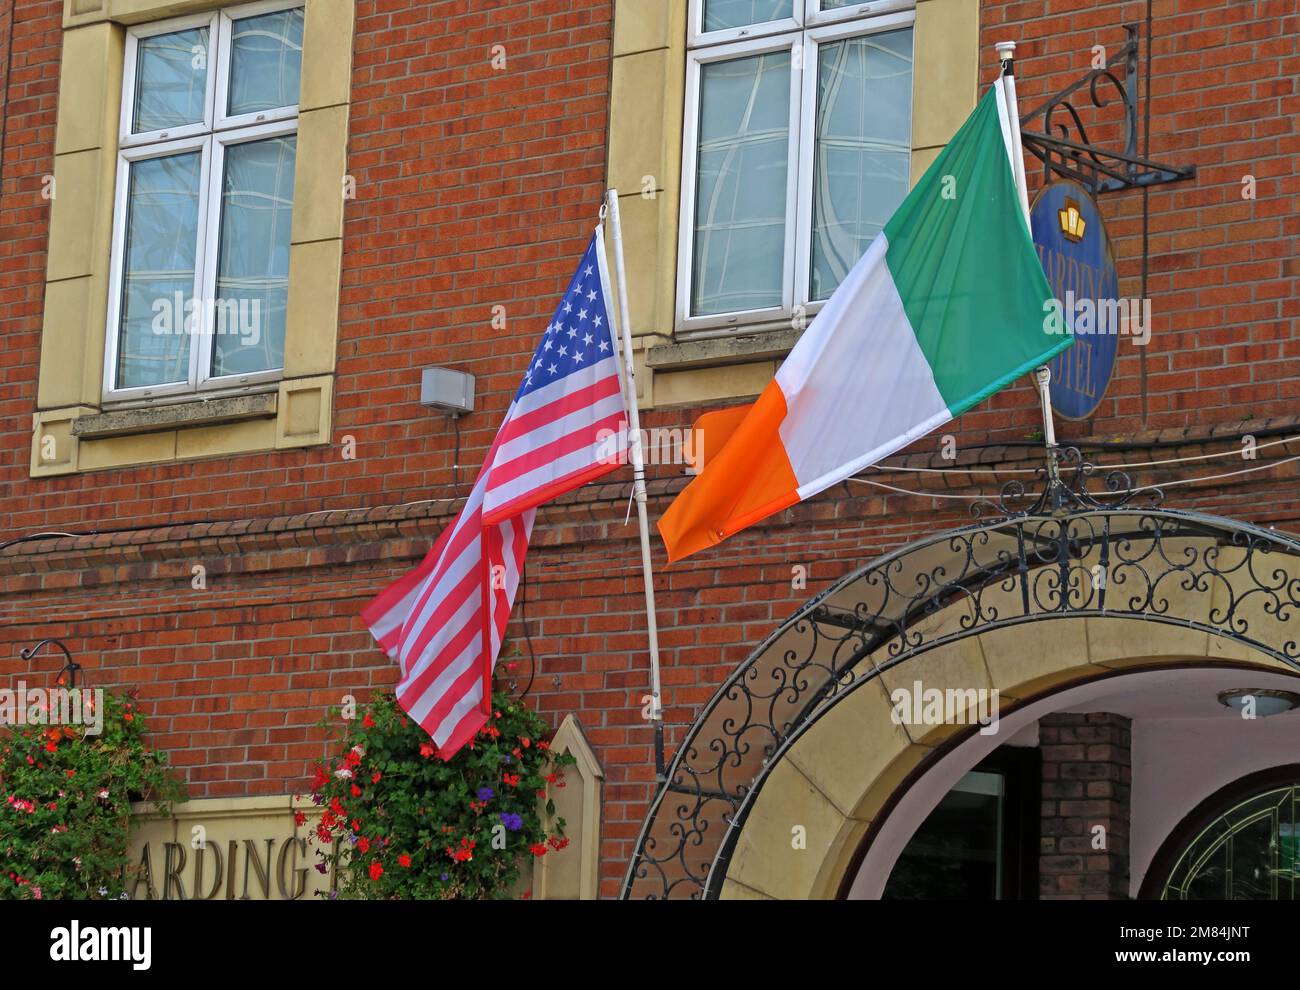 American links with Ireland, USA stars and stripes, & Irish tricolor flag flies outside the Harding Hotel, Fishamble St, Temple Bar, Dublin Stock Photo